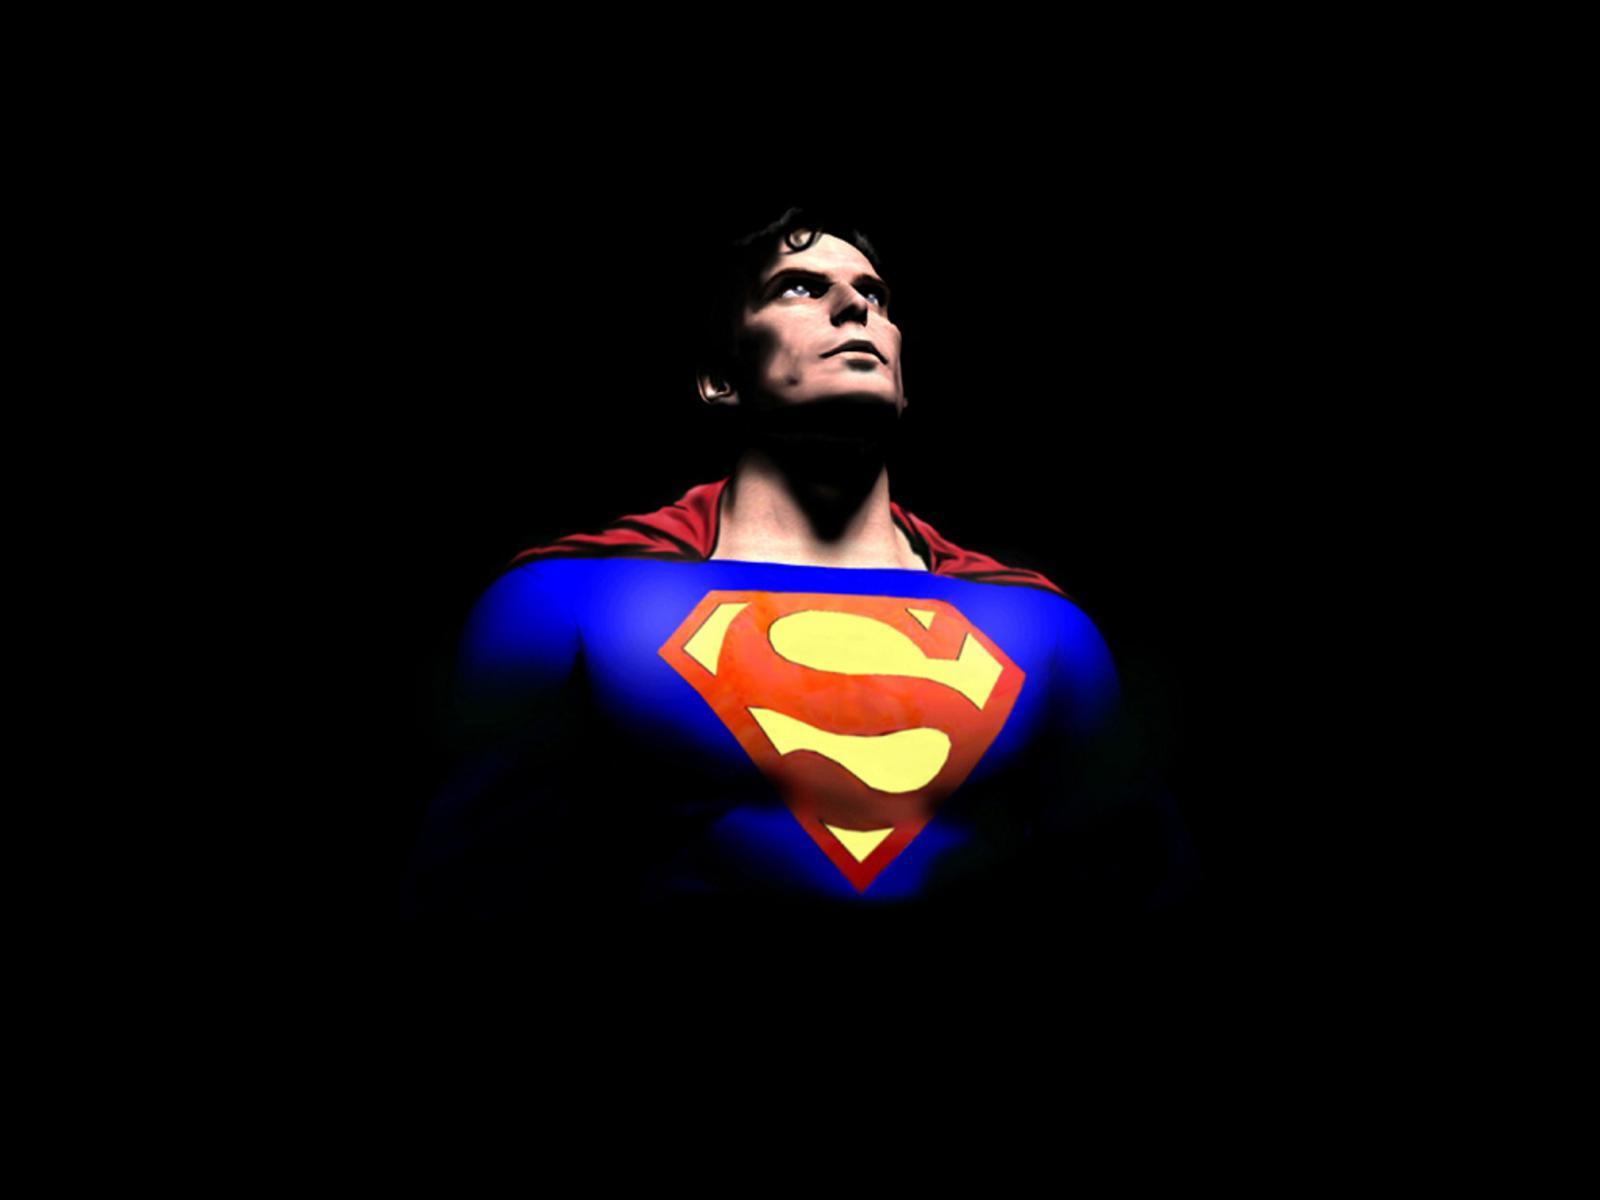 http://1.bp.blogspot.com/-0enxfrLL4AA/TZnGa2oRIpI/AAAAAAAAGk0/66tHXvbENx8/s1600/Superman-achtergronden-hd-superman-wallpapers-afbeelding-17.jpg